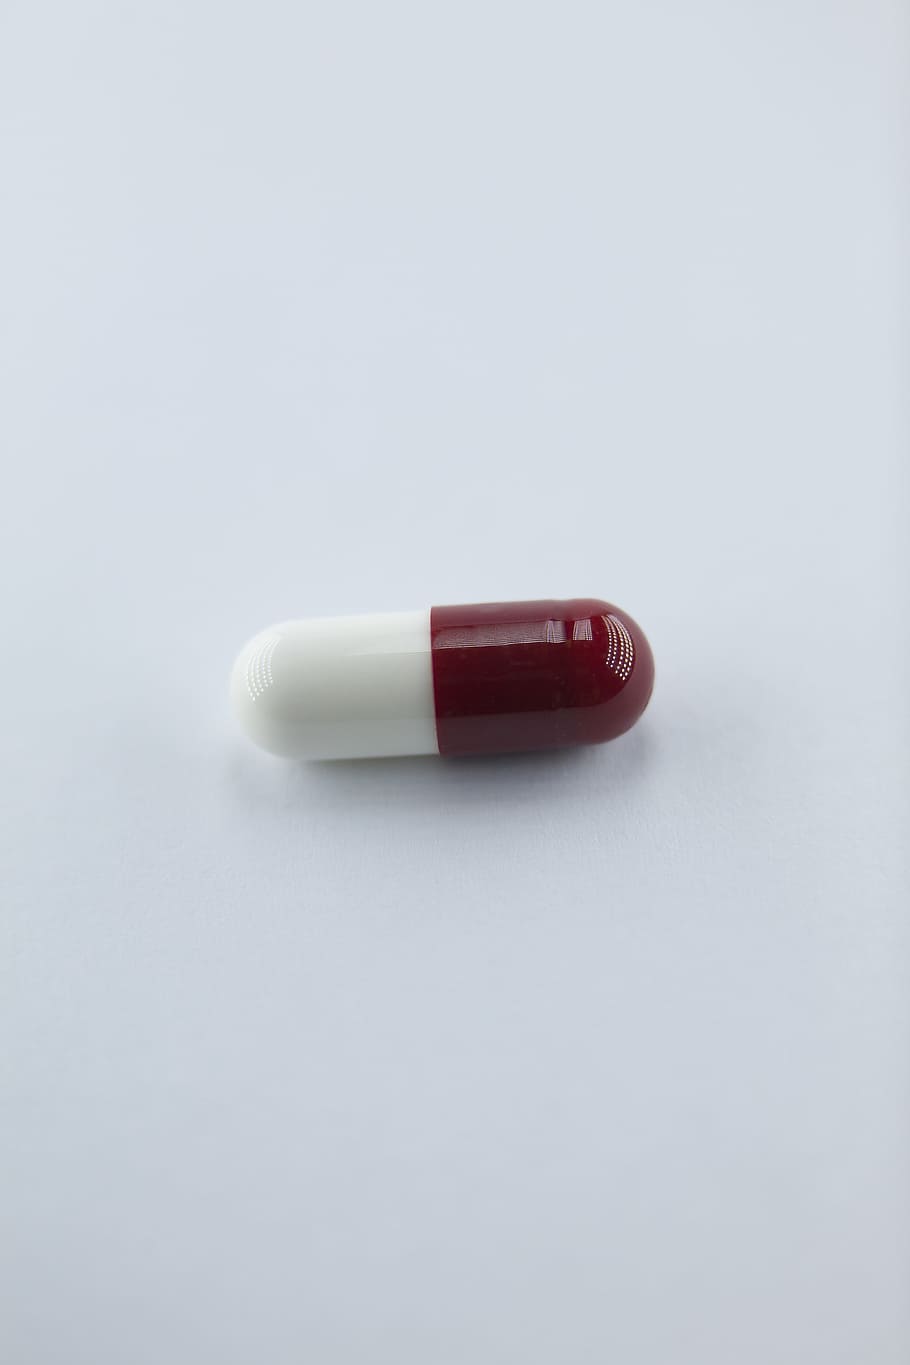 sobre, drogas, salud, farmacéutica, médica, tratamiento, Foto de estudio, objeto único, píldora, rojo